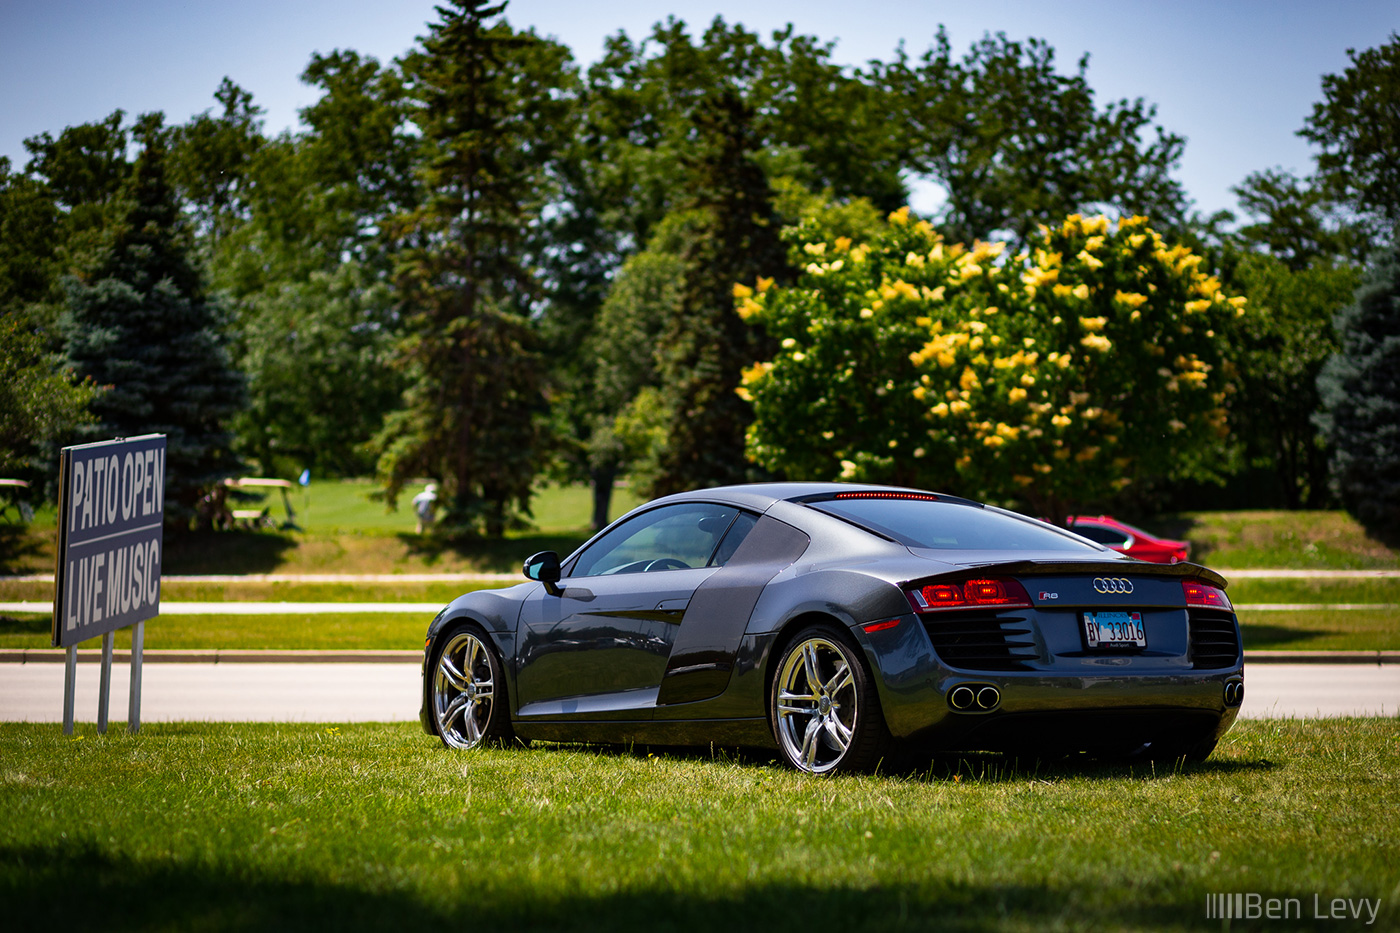 Grey Audi R8 on the lawn